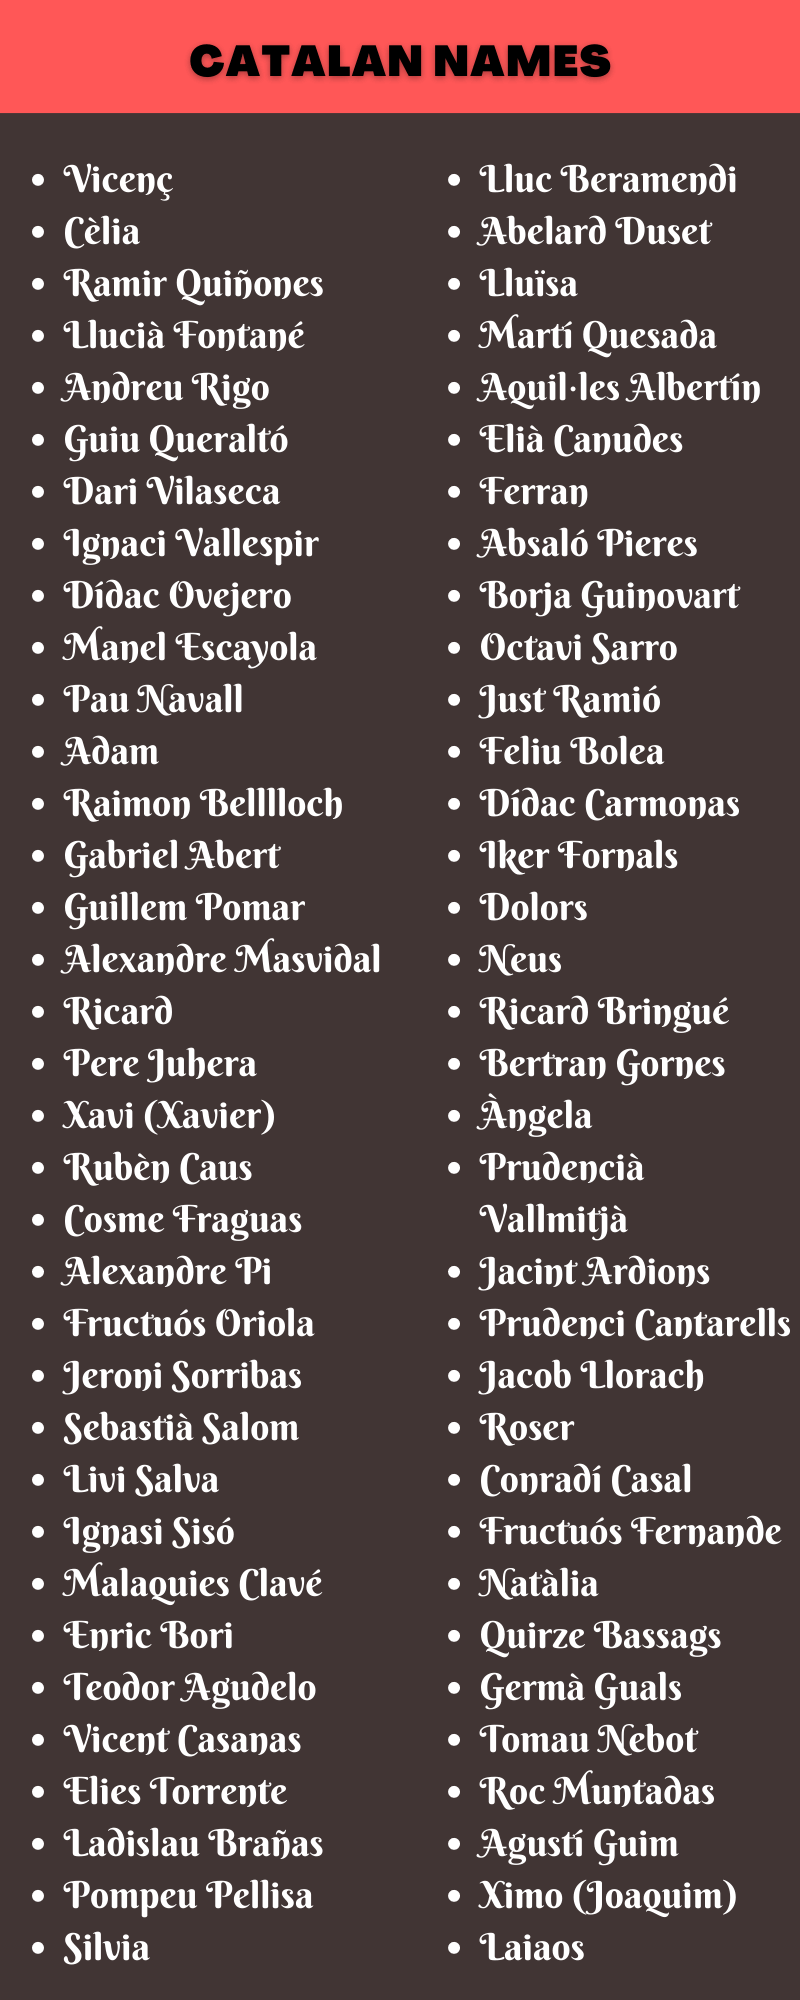 Catalan Names